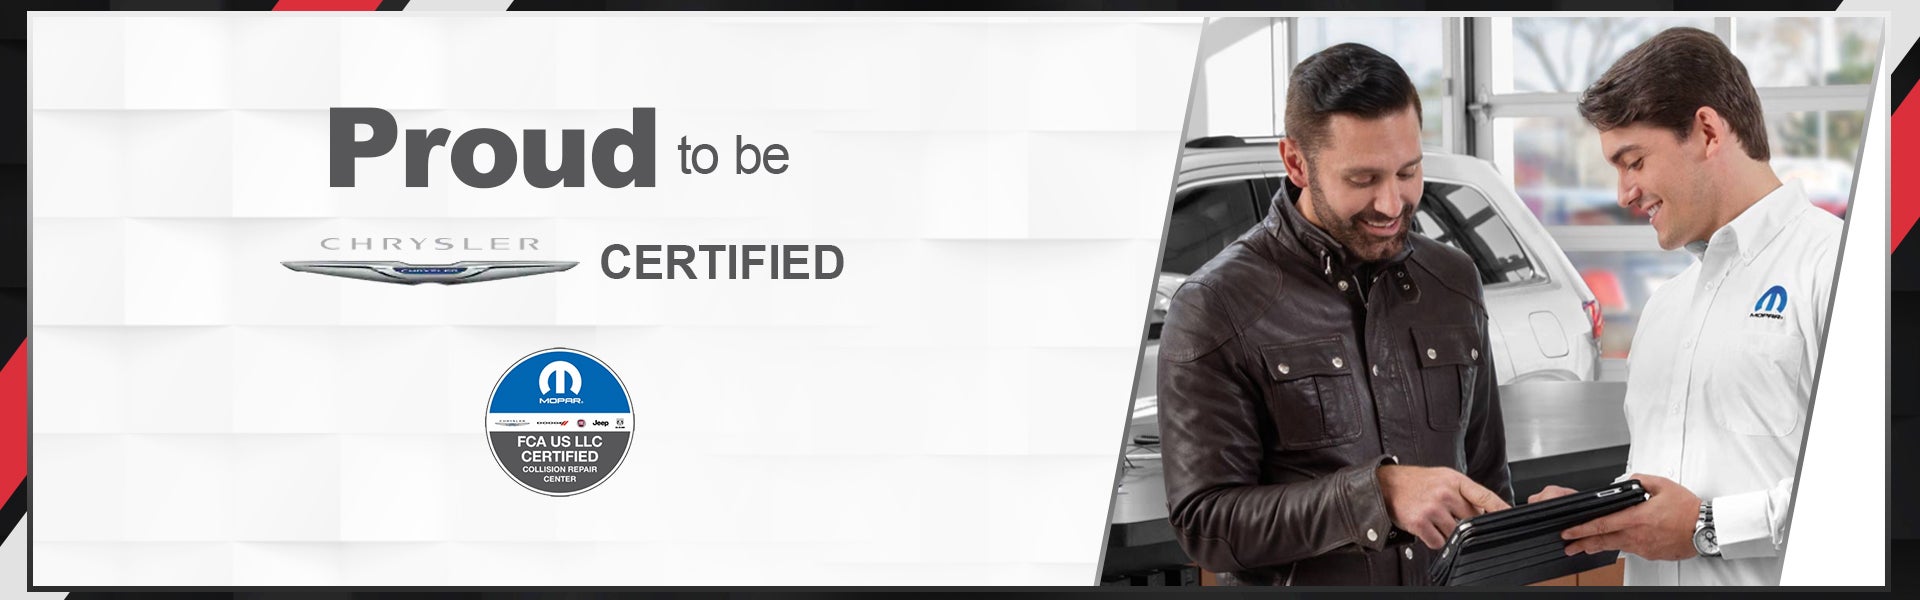 Chrysler auto body certification